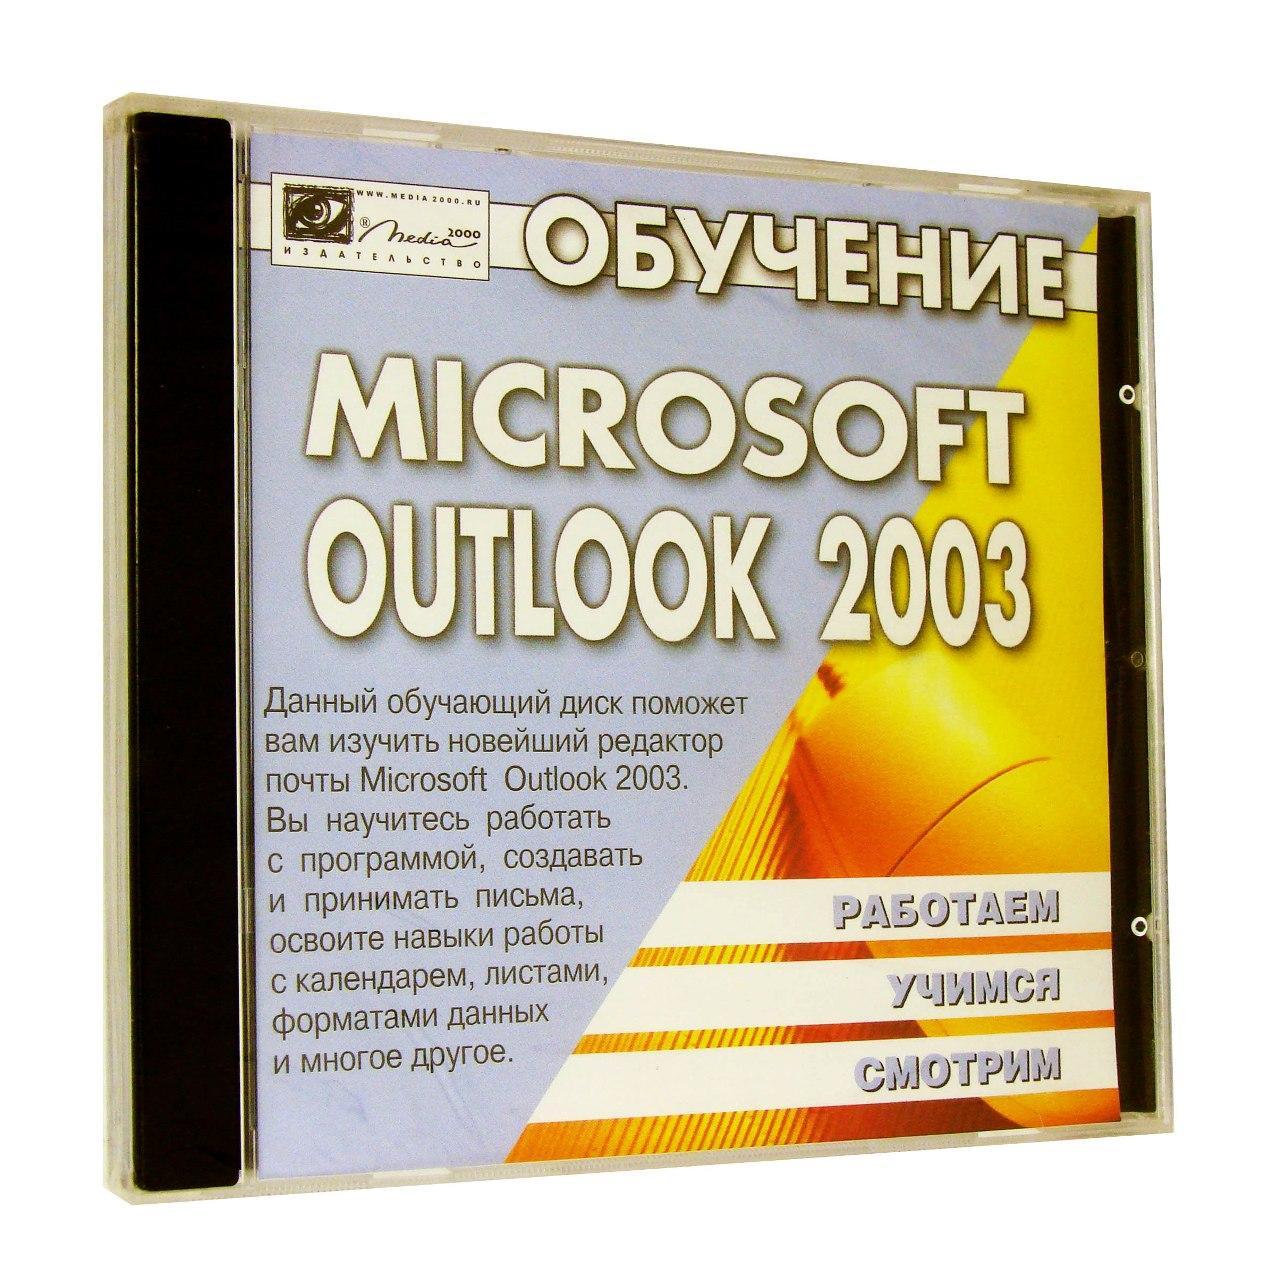  -  Microsoft Outlook 2003 (PC),  "Media2000", 1CD